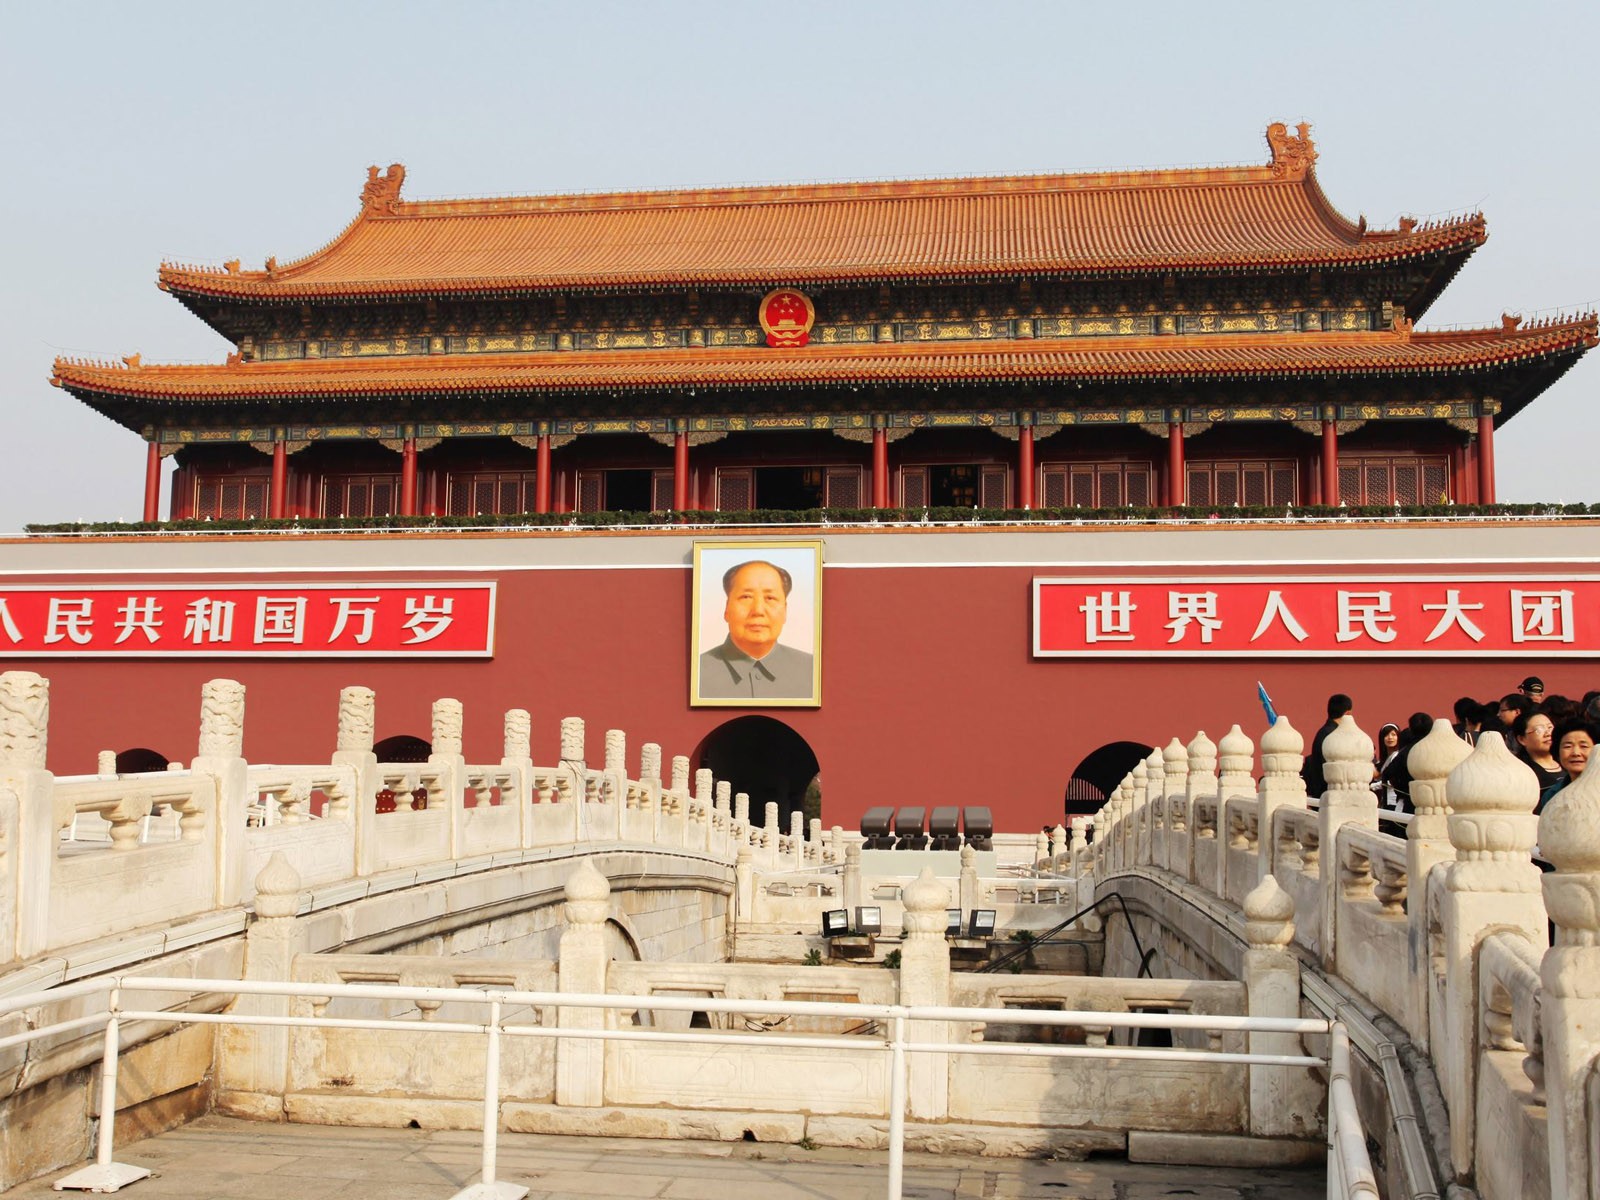 Tour Beijing - Tiananmen Square (ggc works) #1 - 1600x1200